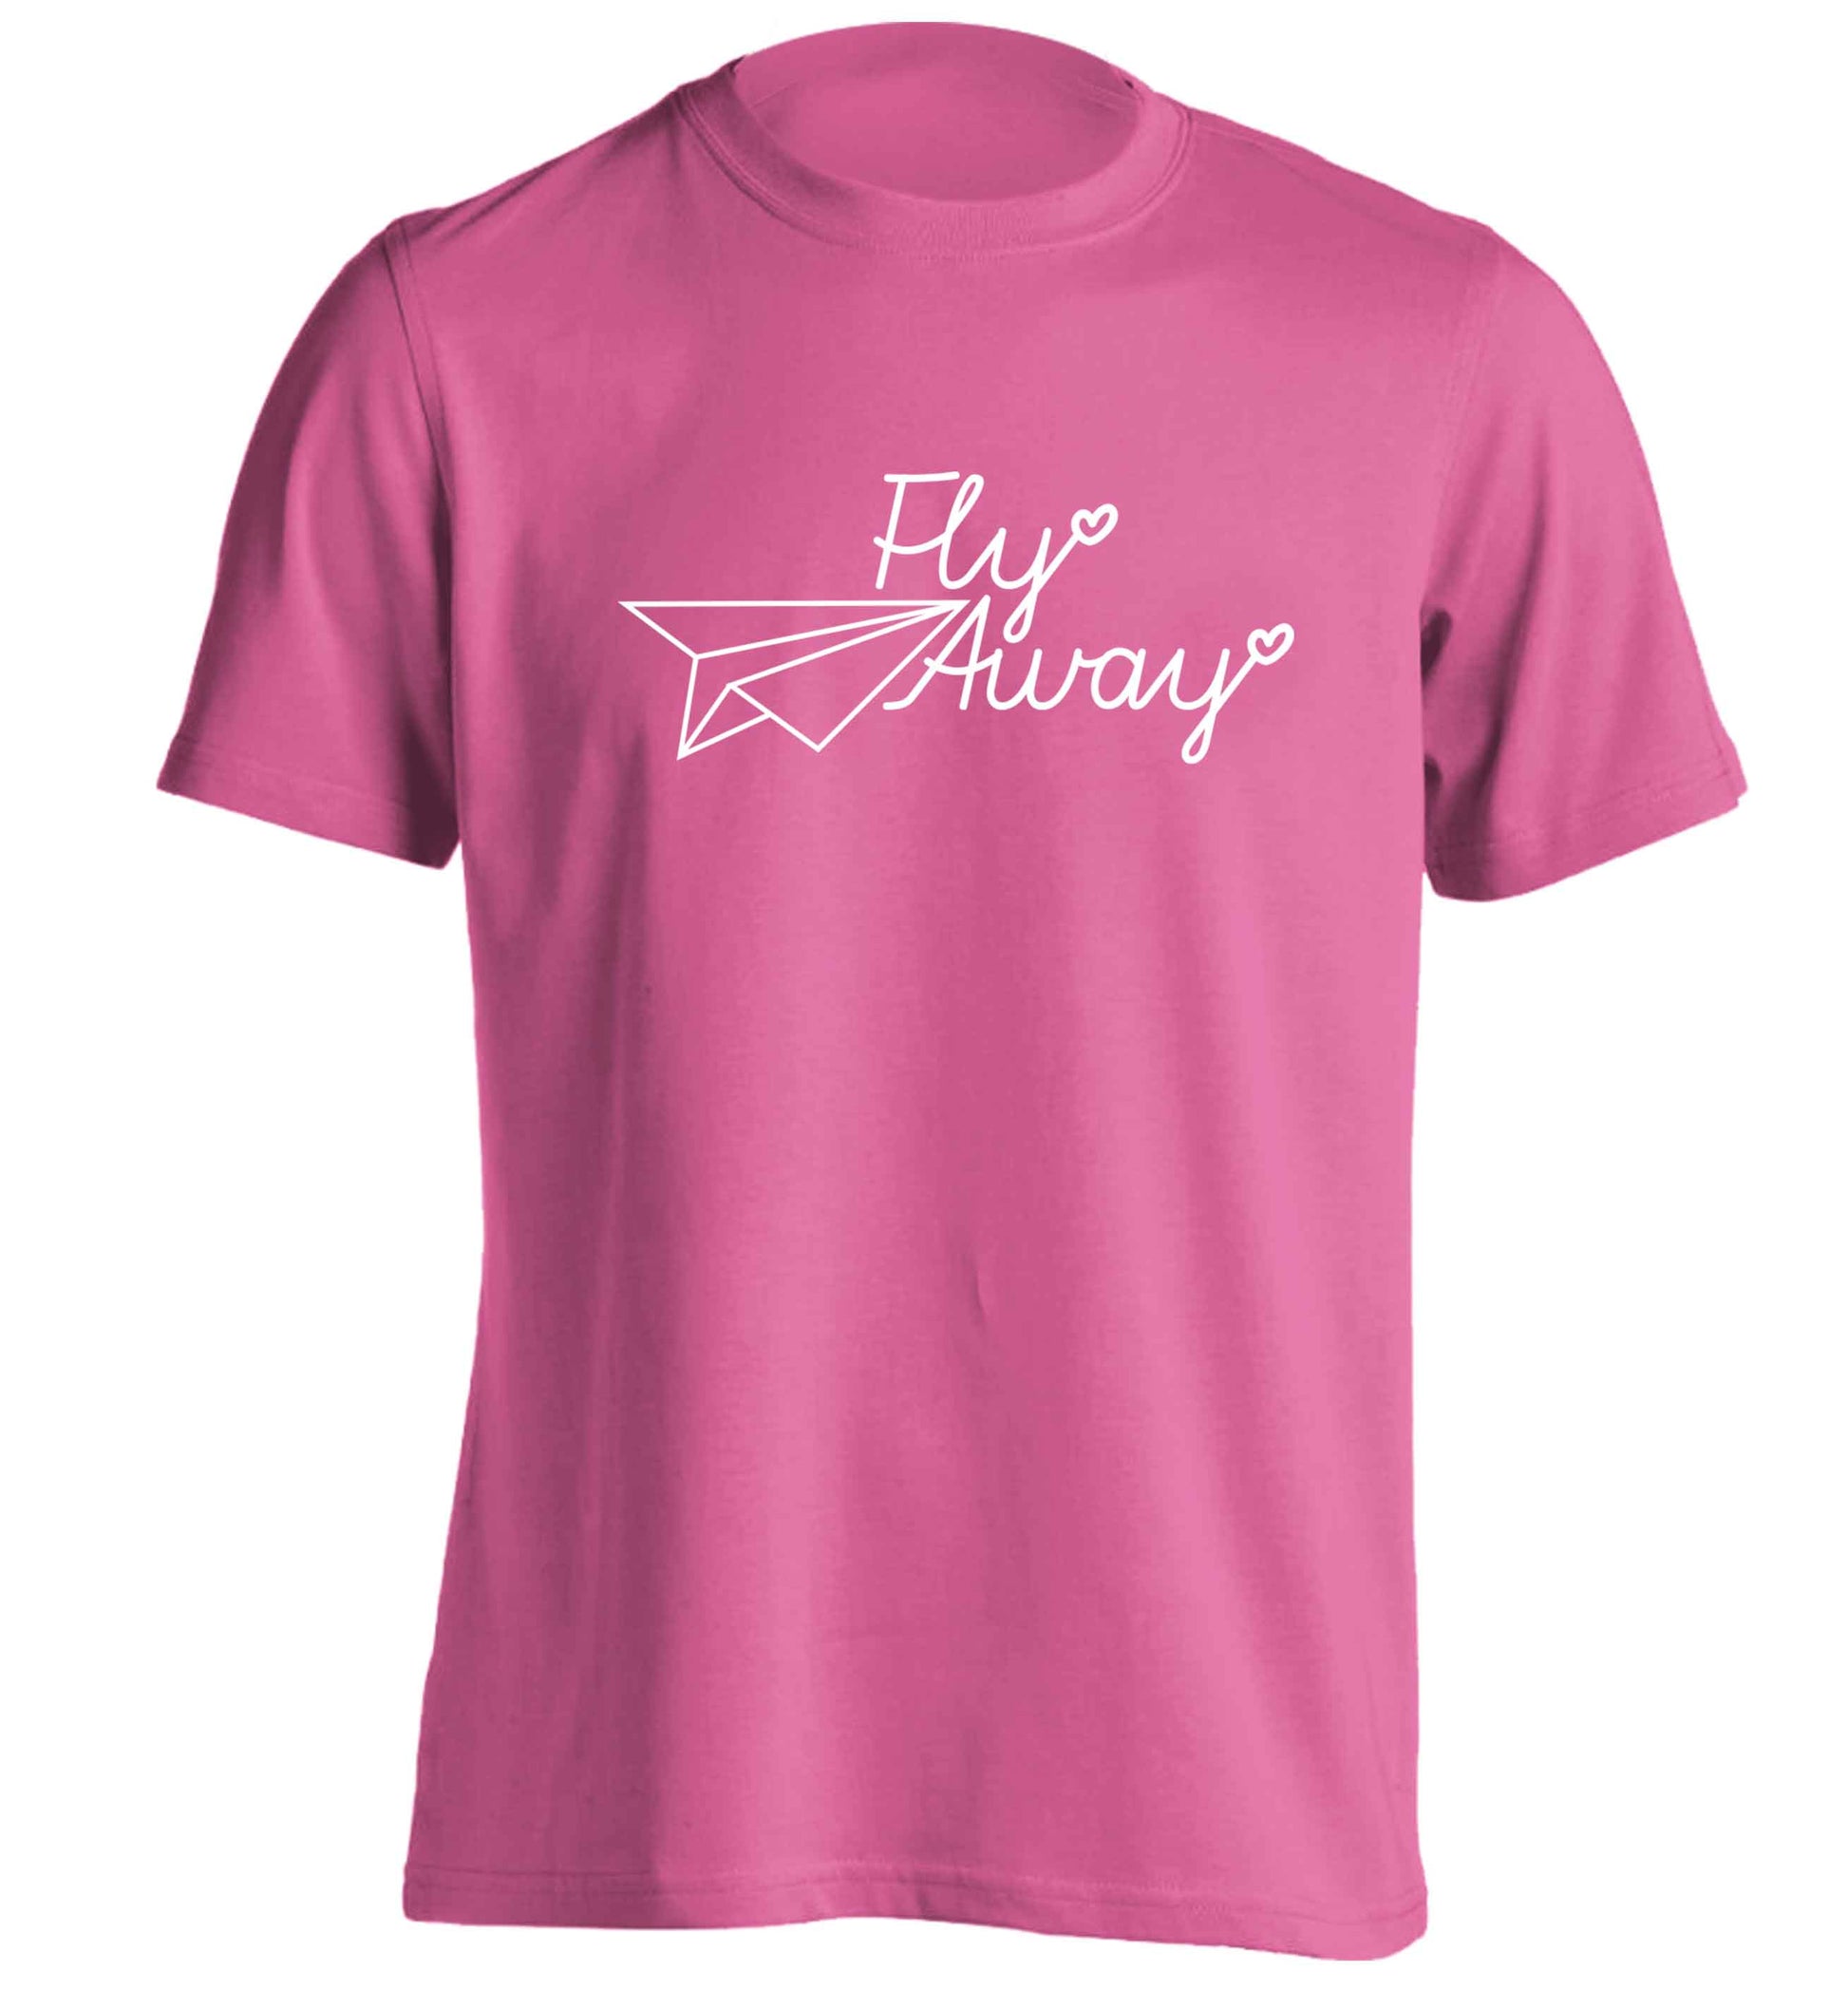 Fly away adults unisex pink Tshirt 2XL